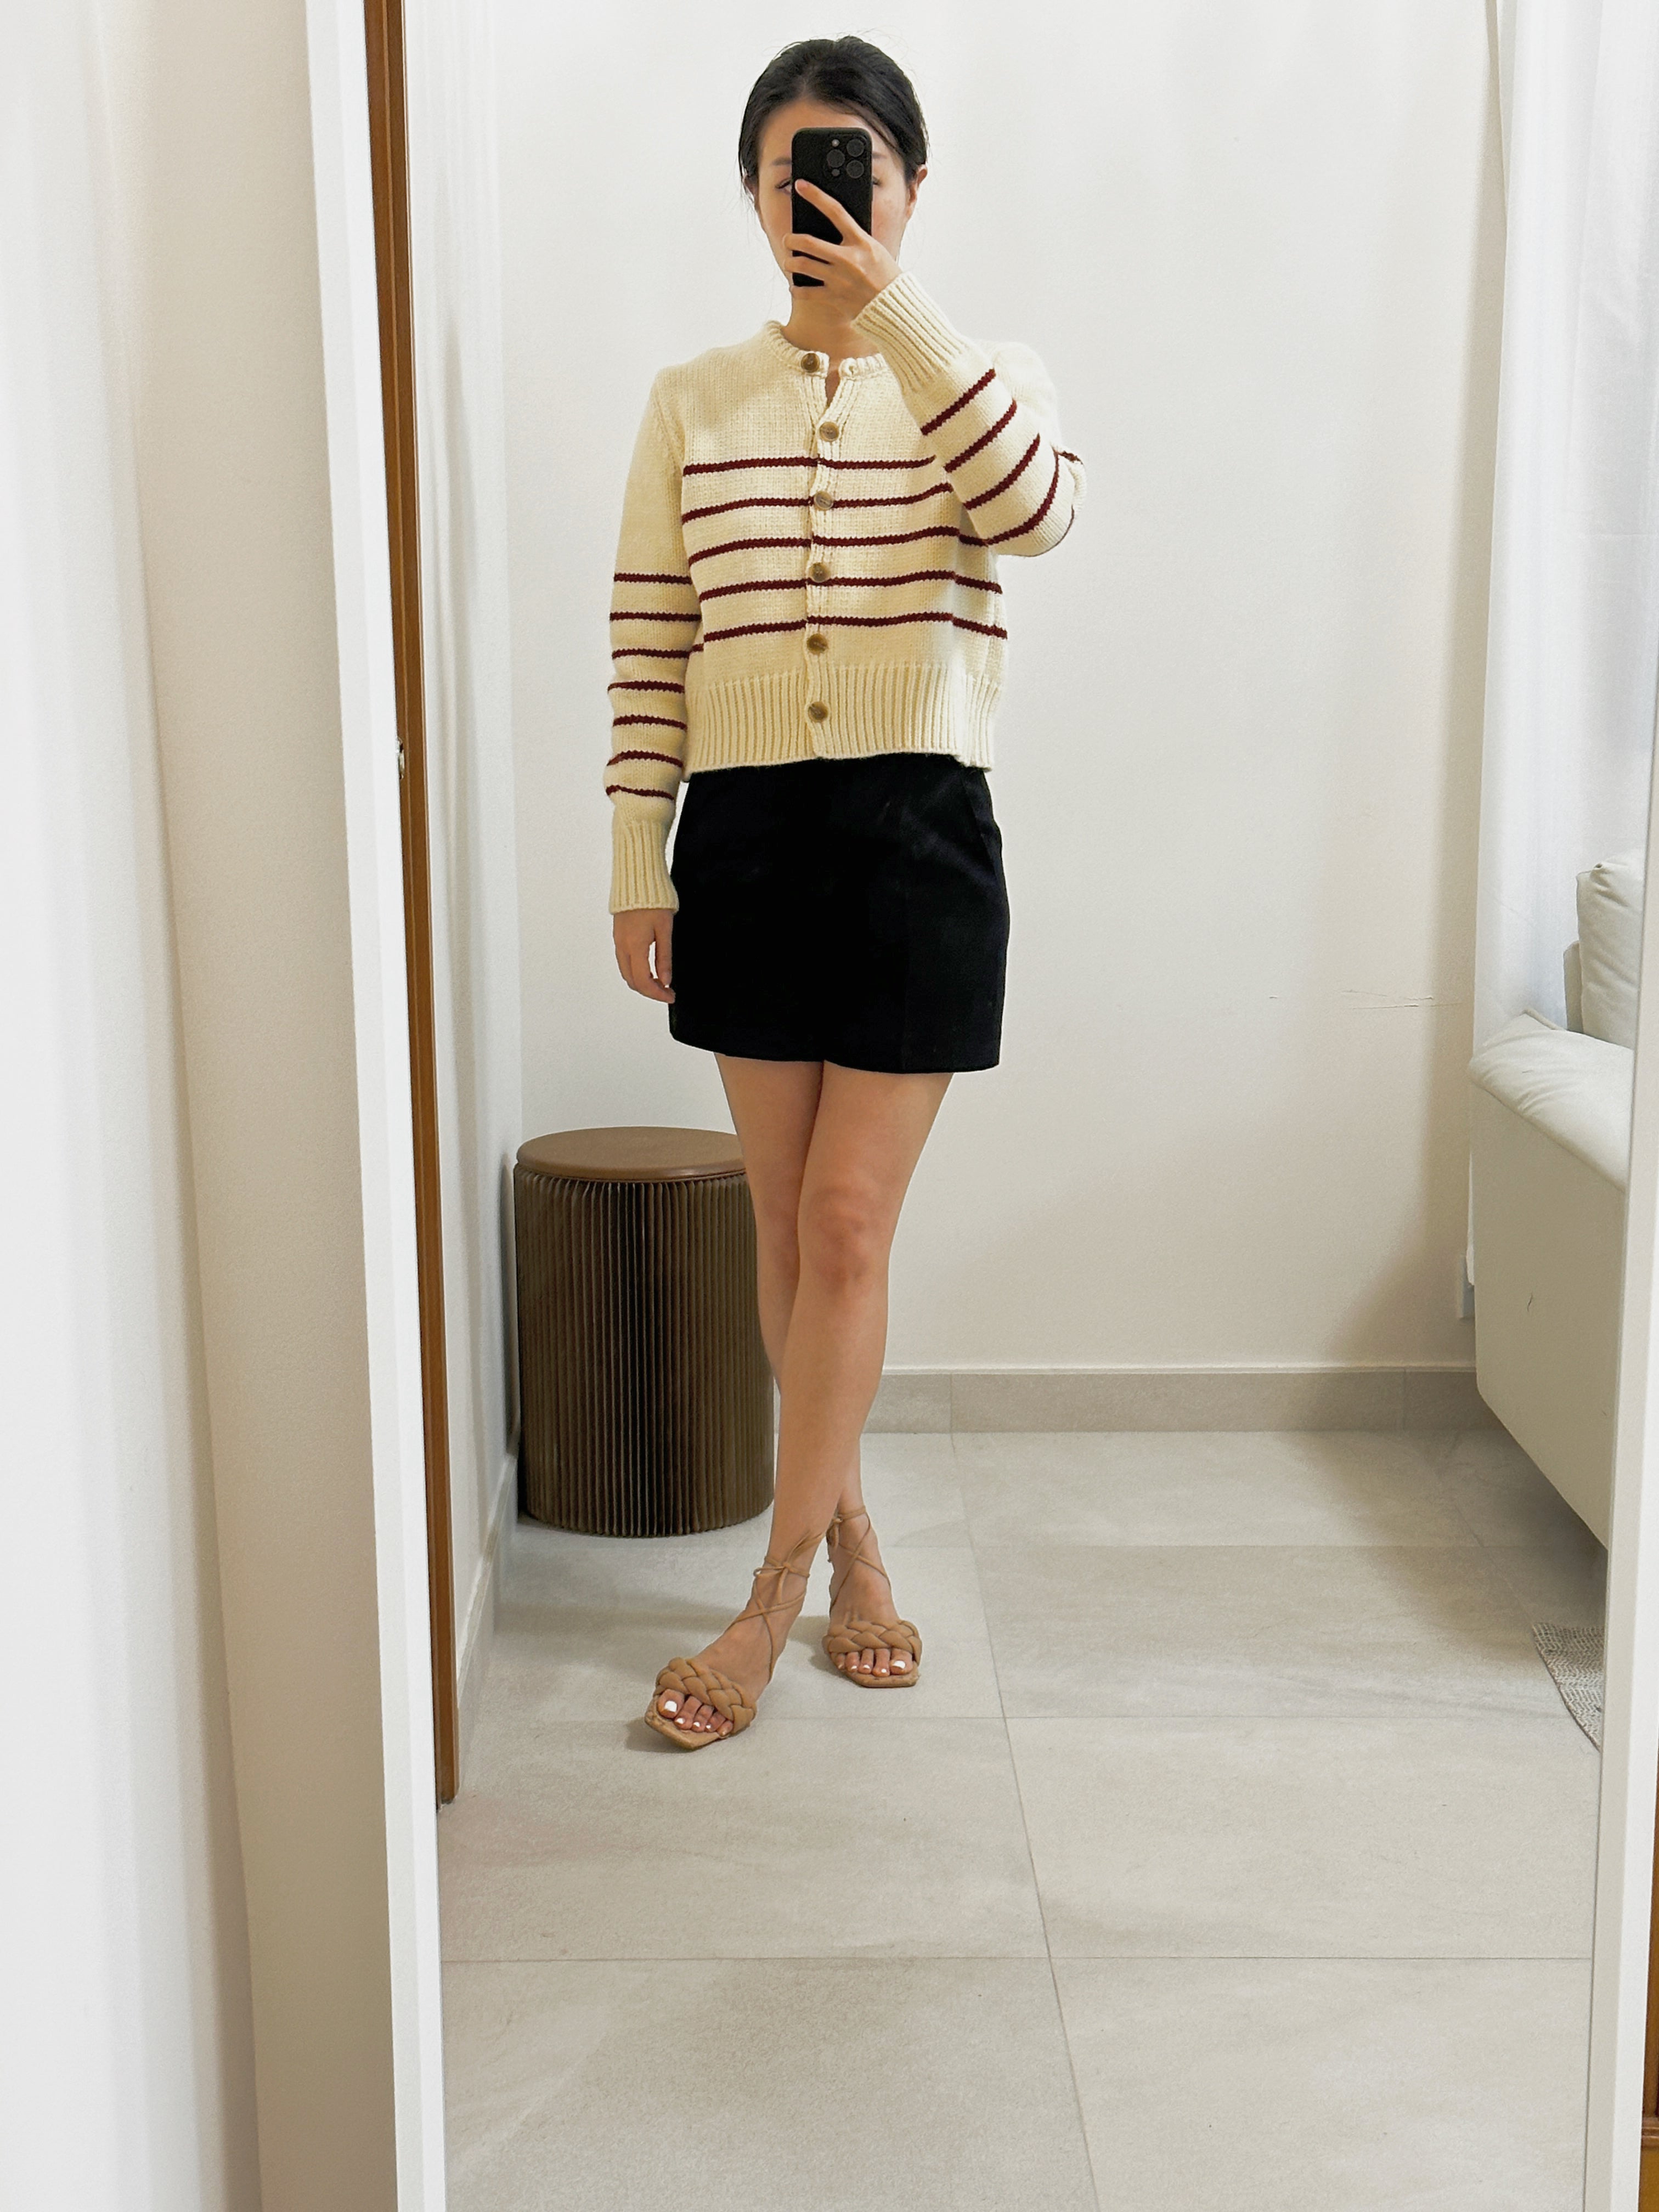 Korean Woolly Striped Cardigan in Cream/Red